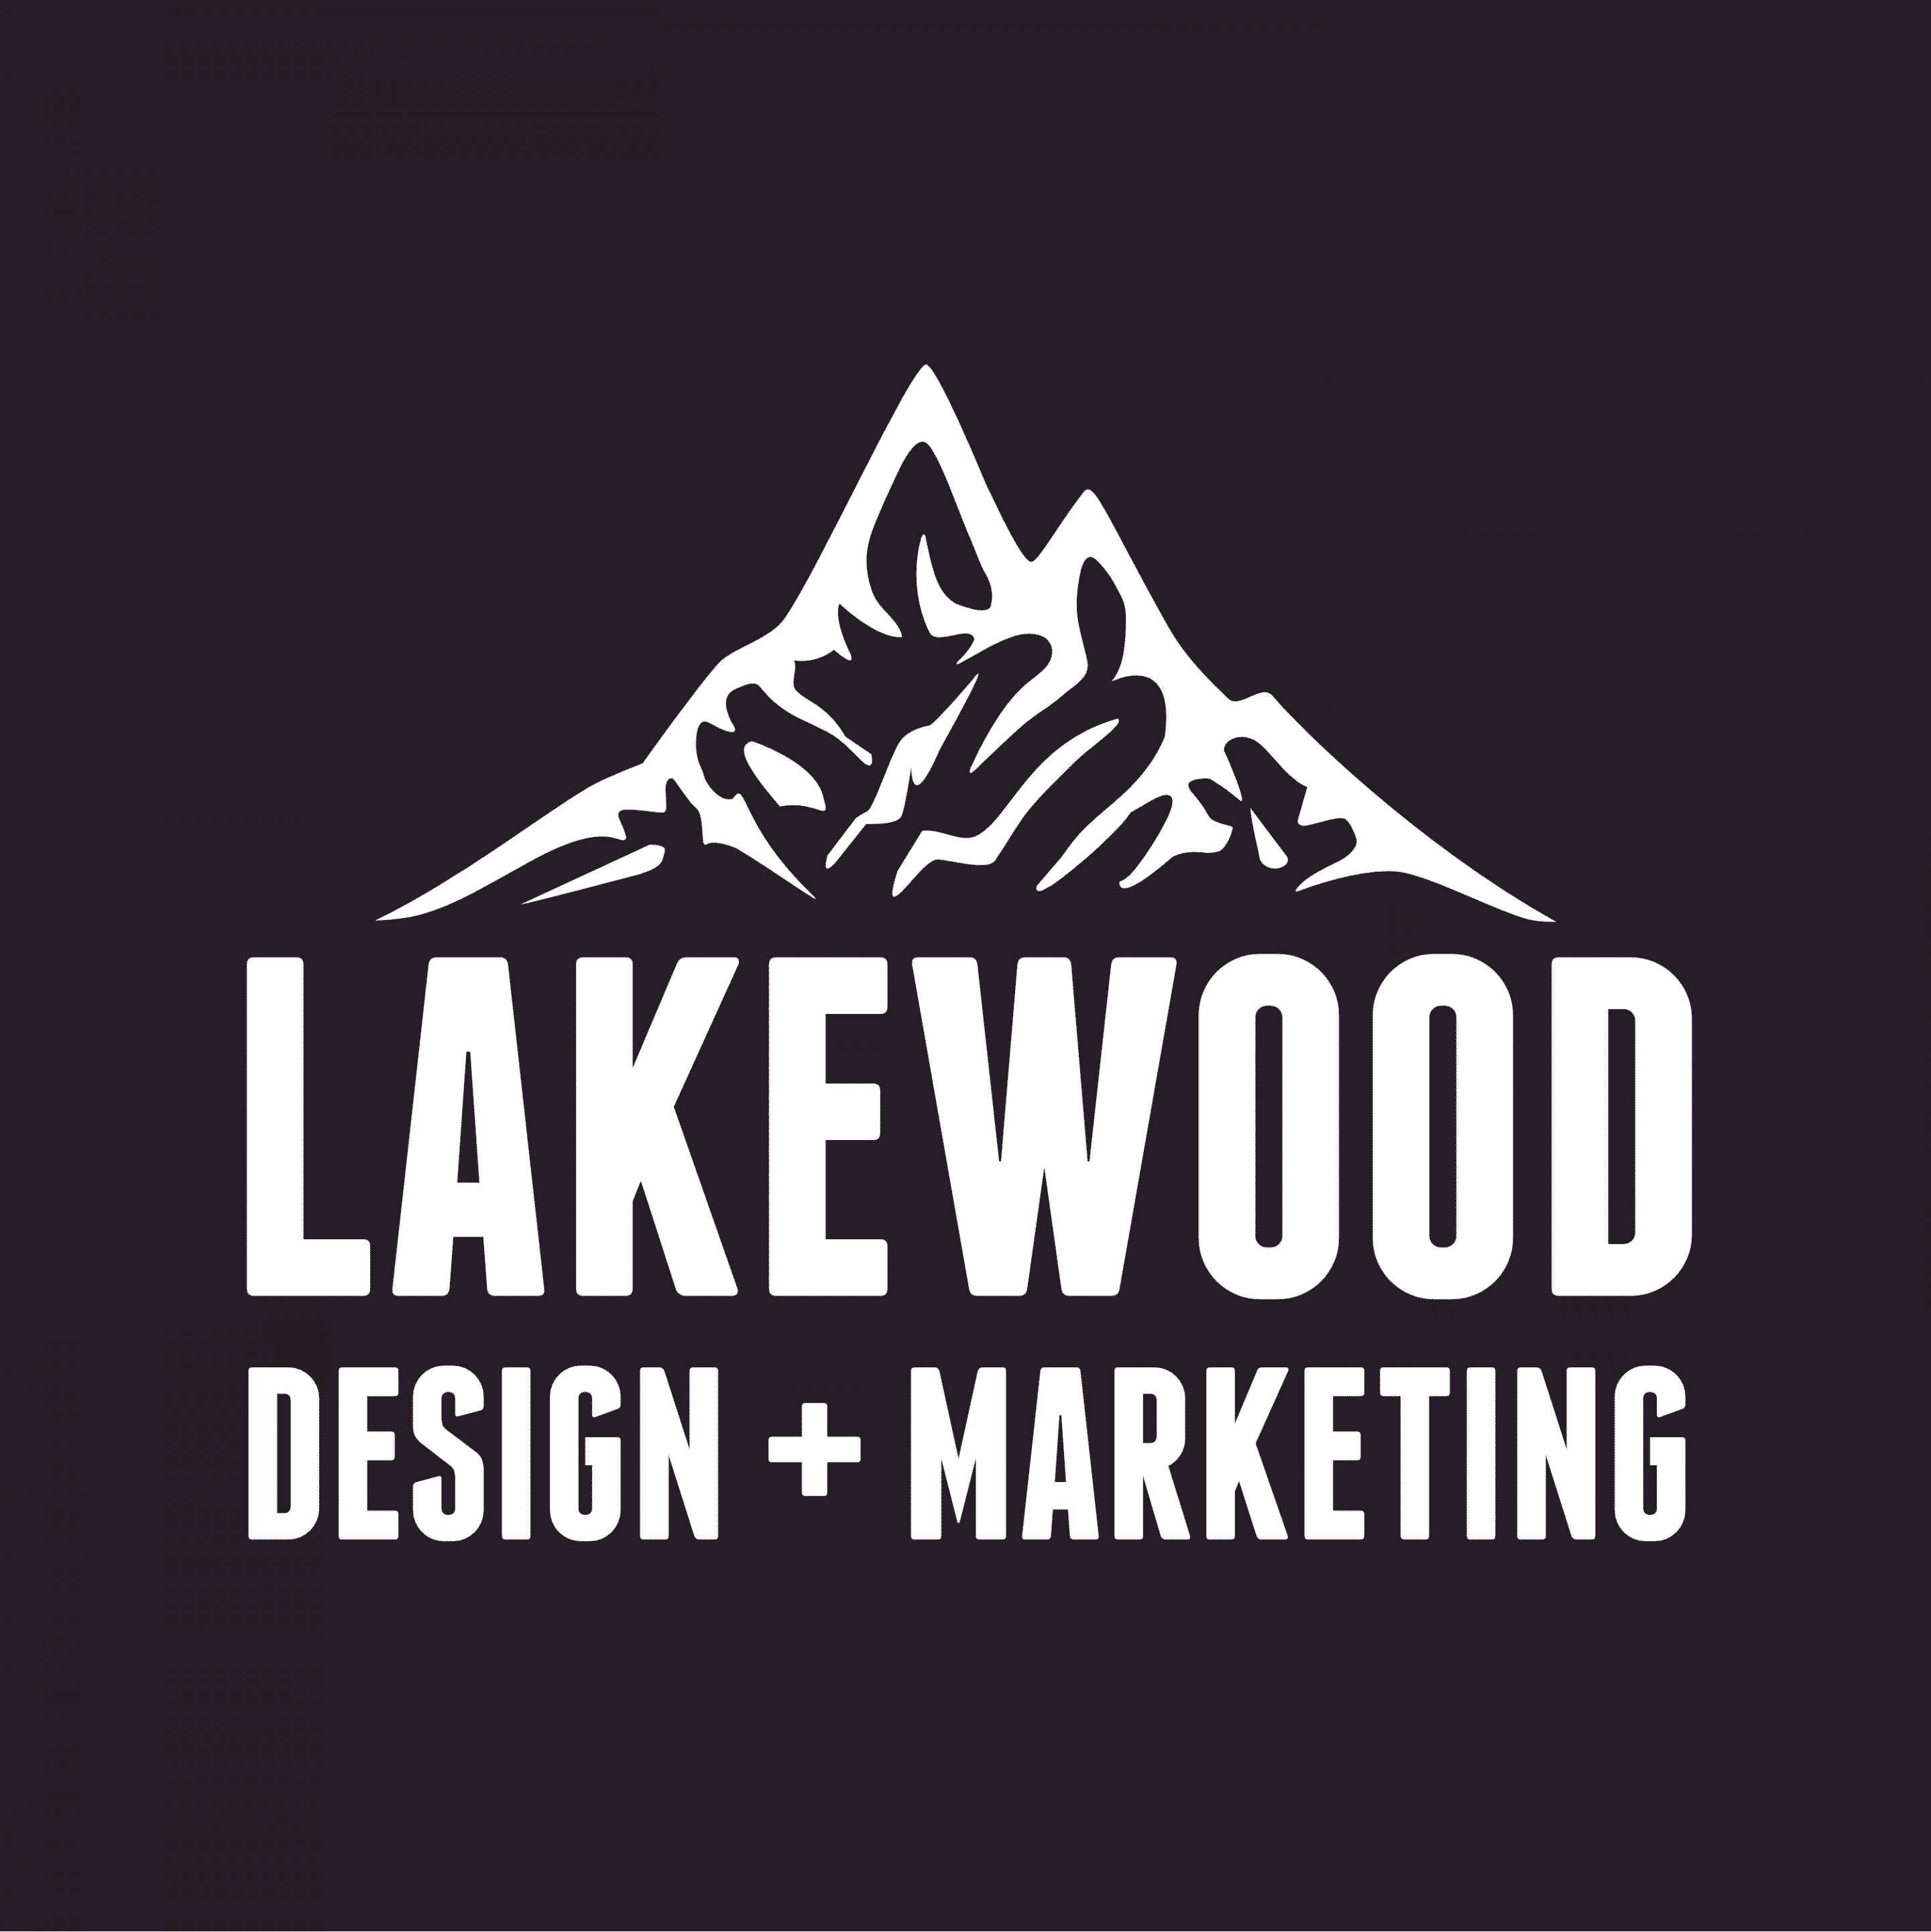 Lakewood design + marketing, new branding and website